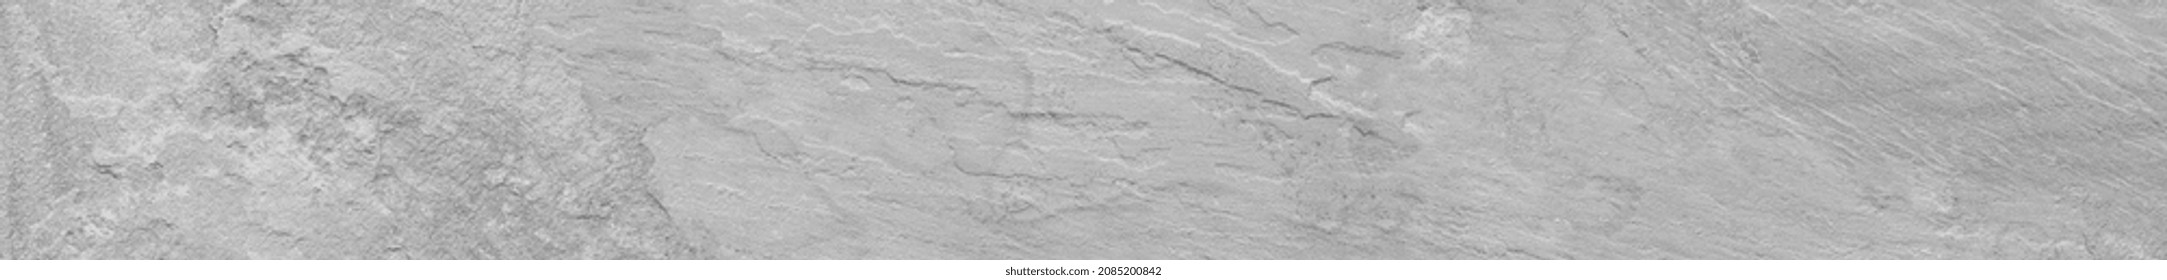 marble texture background  Matt marble texture  natural marble  rustic texture  marbel stone texture for digital wall tiles  natural breccia marble tiles design  granite ceramic TILES